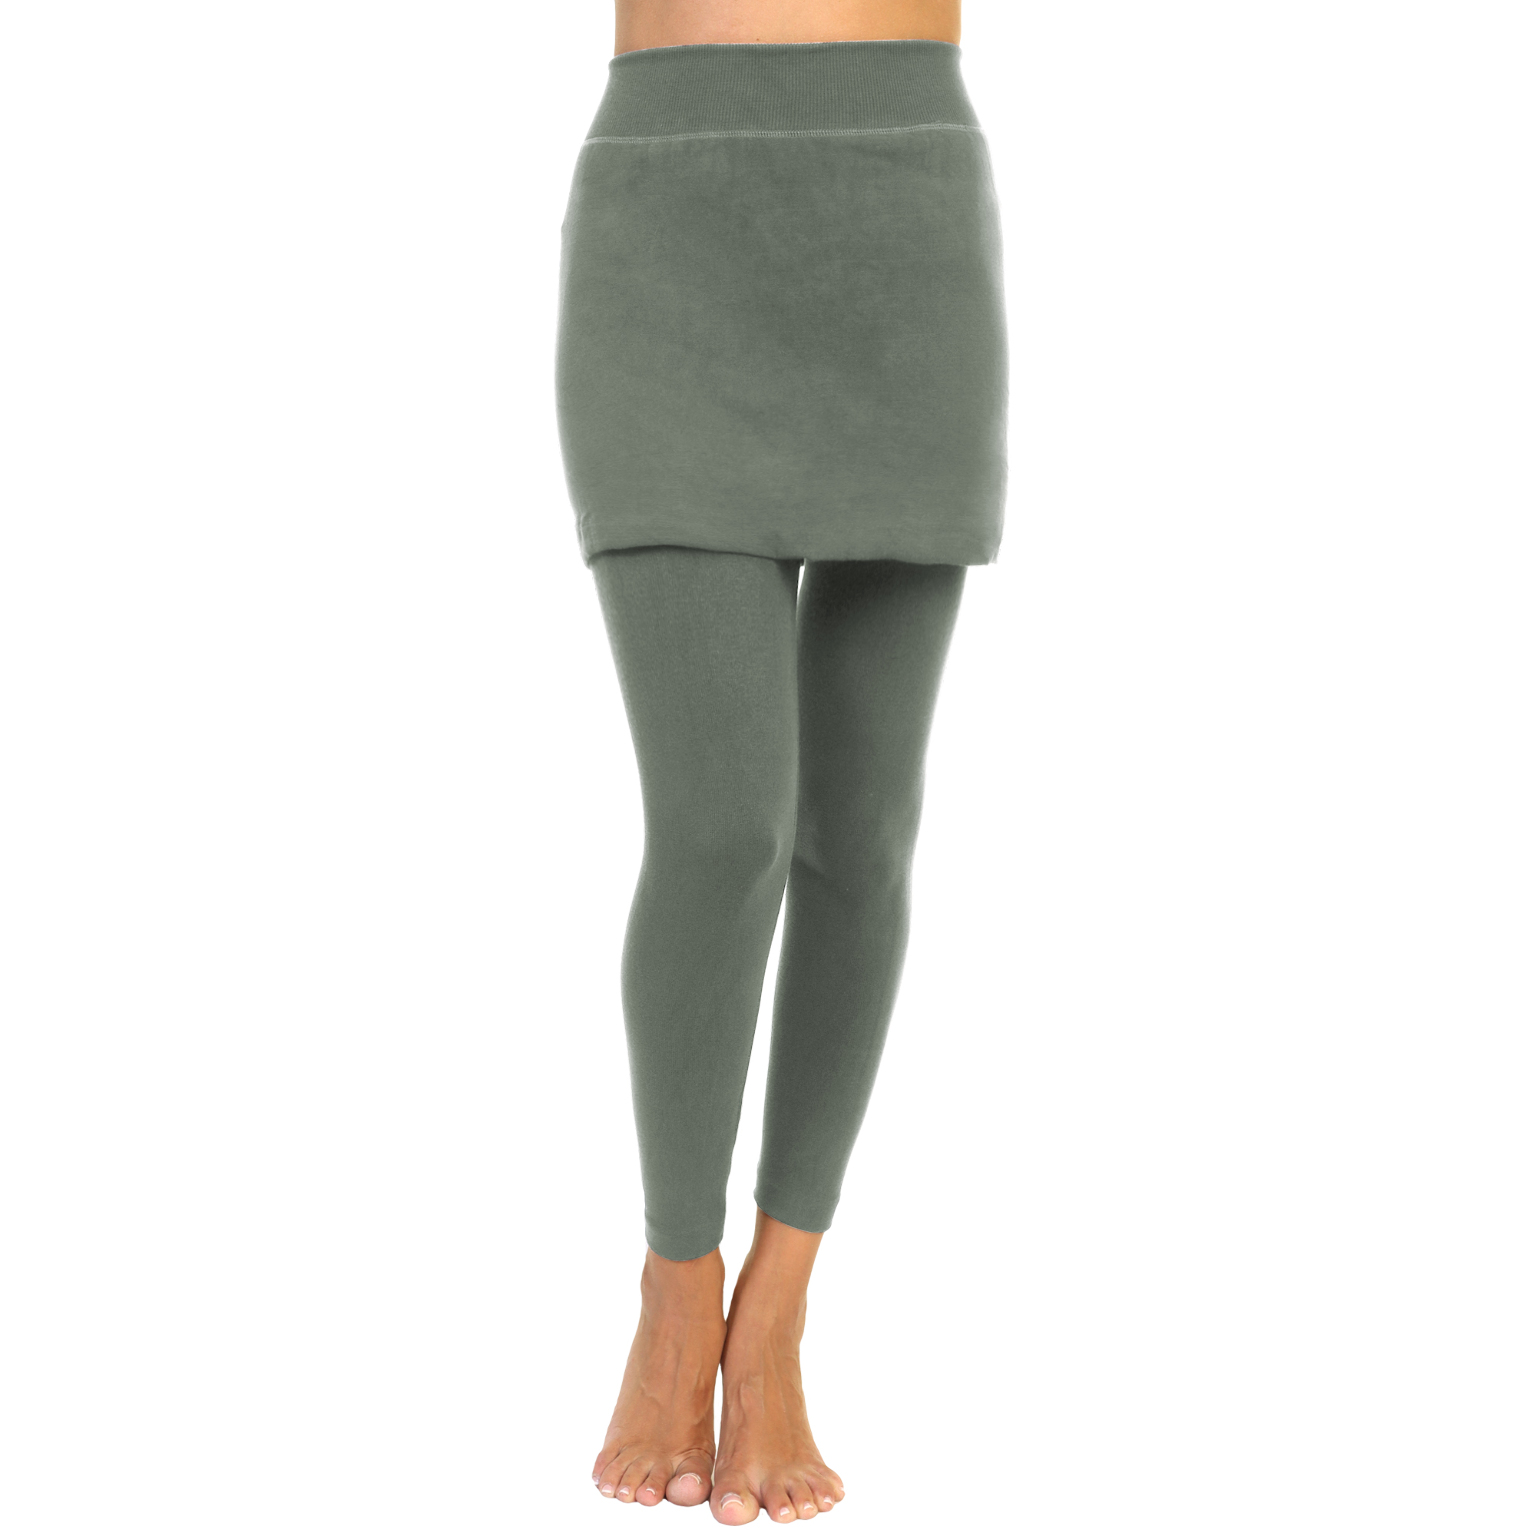 Wholesale Women's Leggings with Mini Skirt in Grey - DollarDays